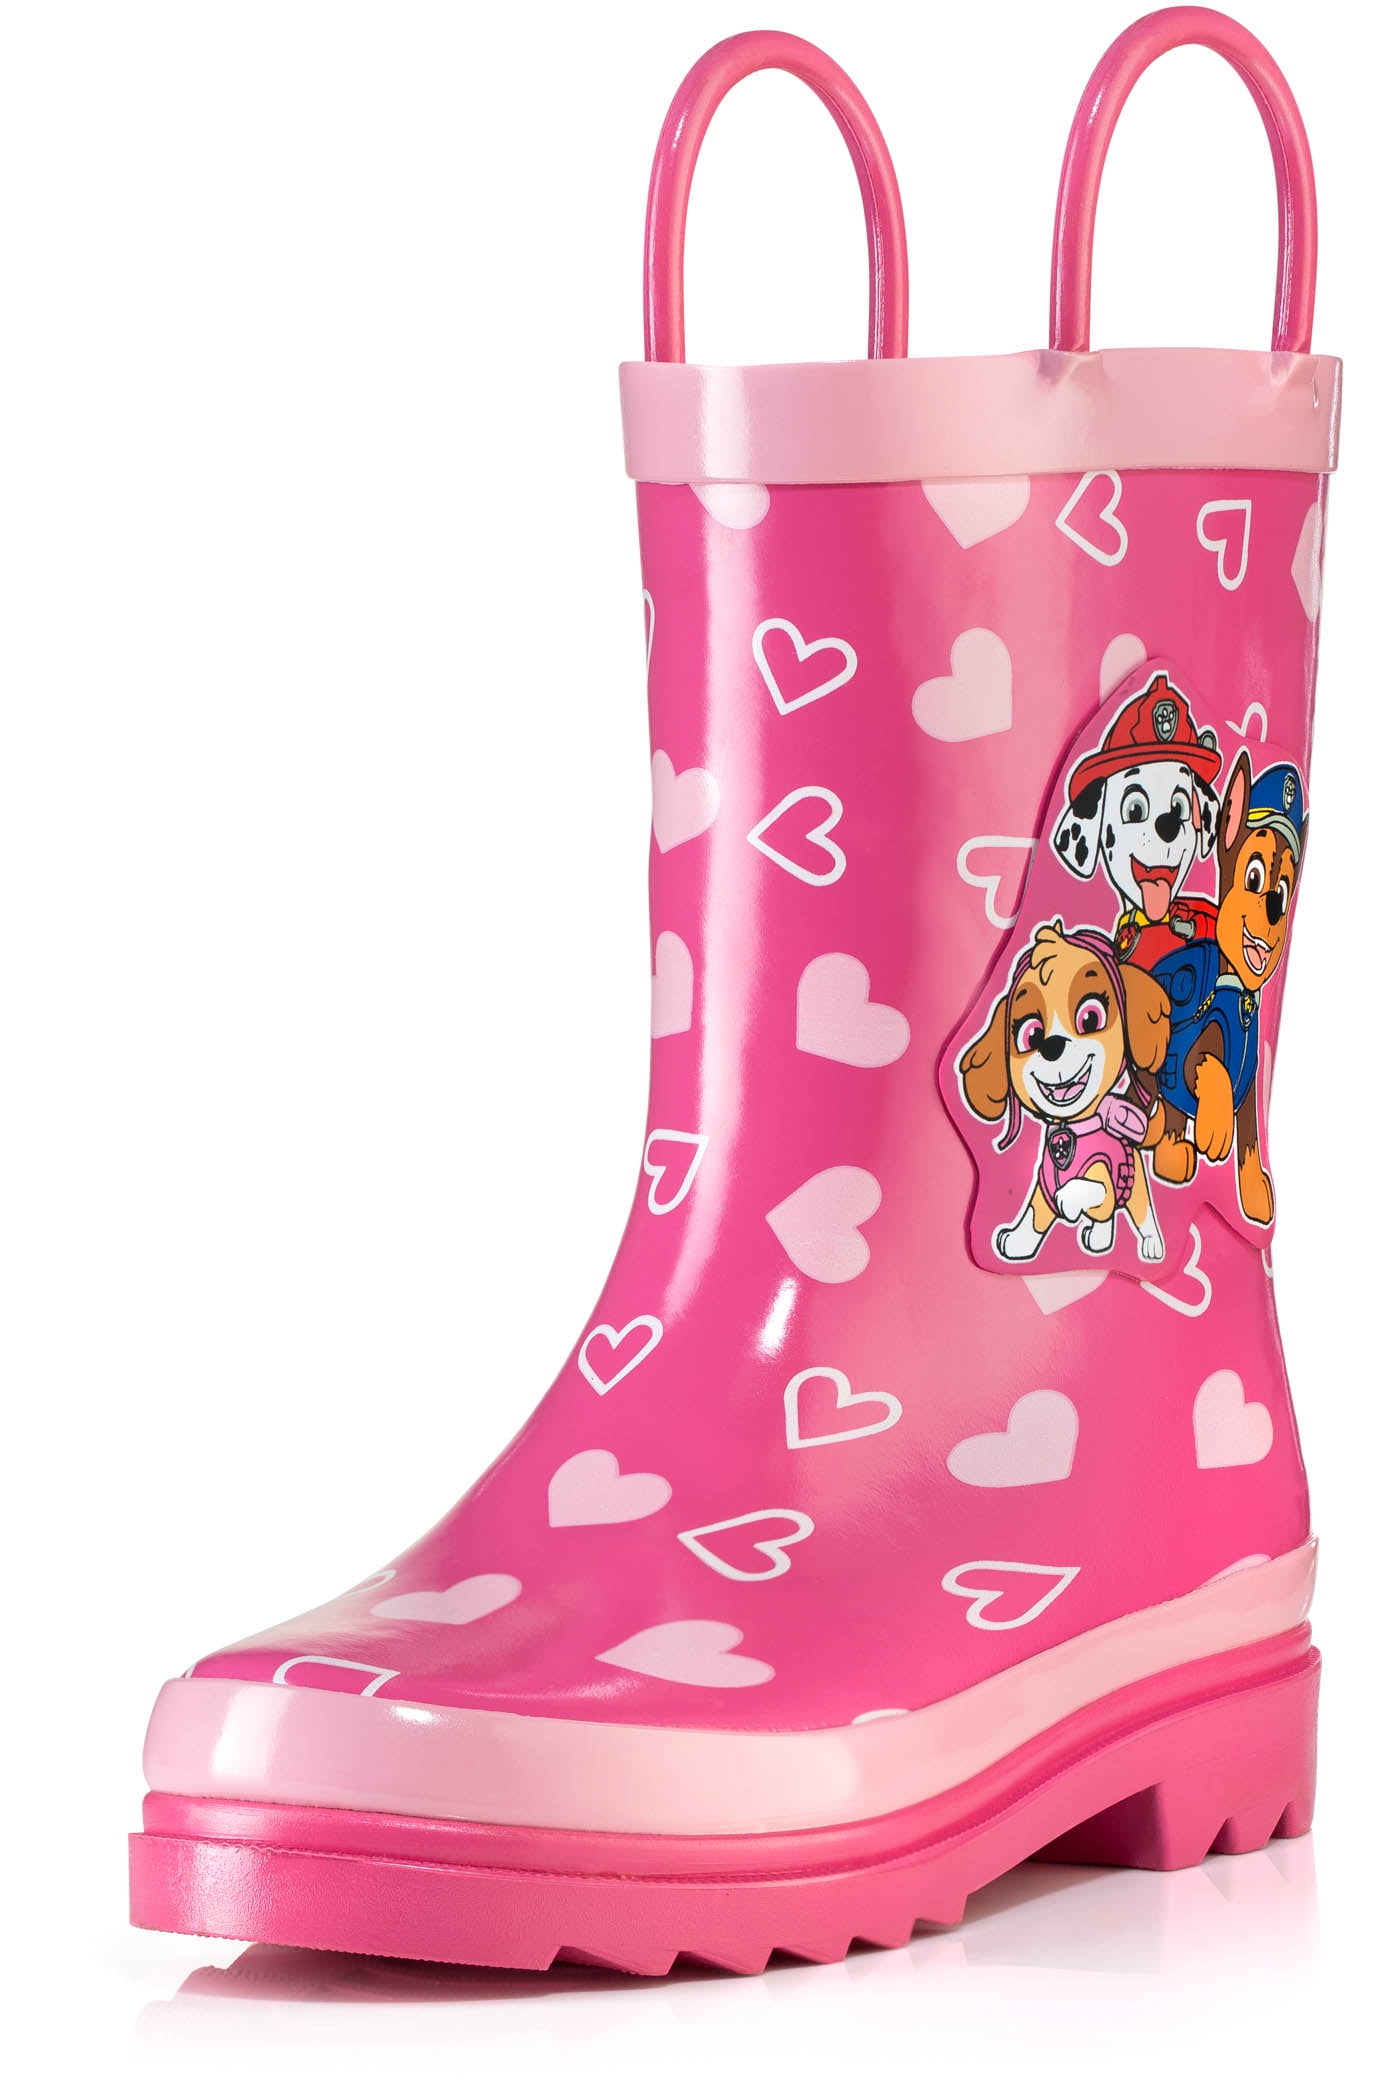 Girls Toddler Slip On Pink Purple Heart Striped Rainboots Rain Boots 5 6 7 9 NEW 